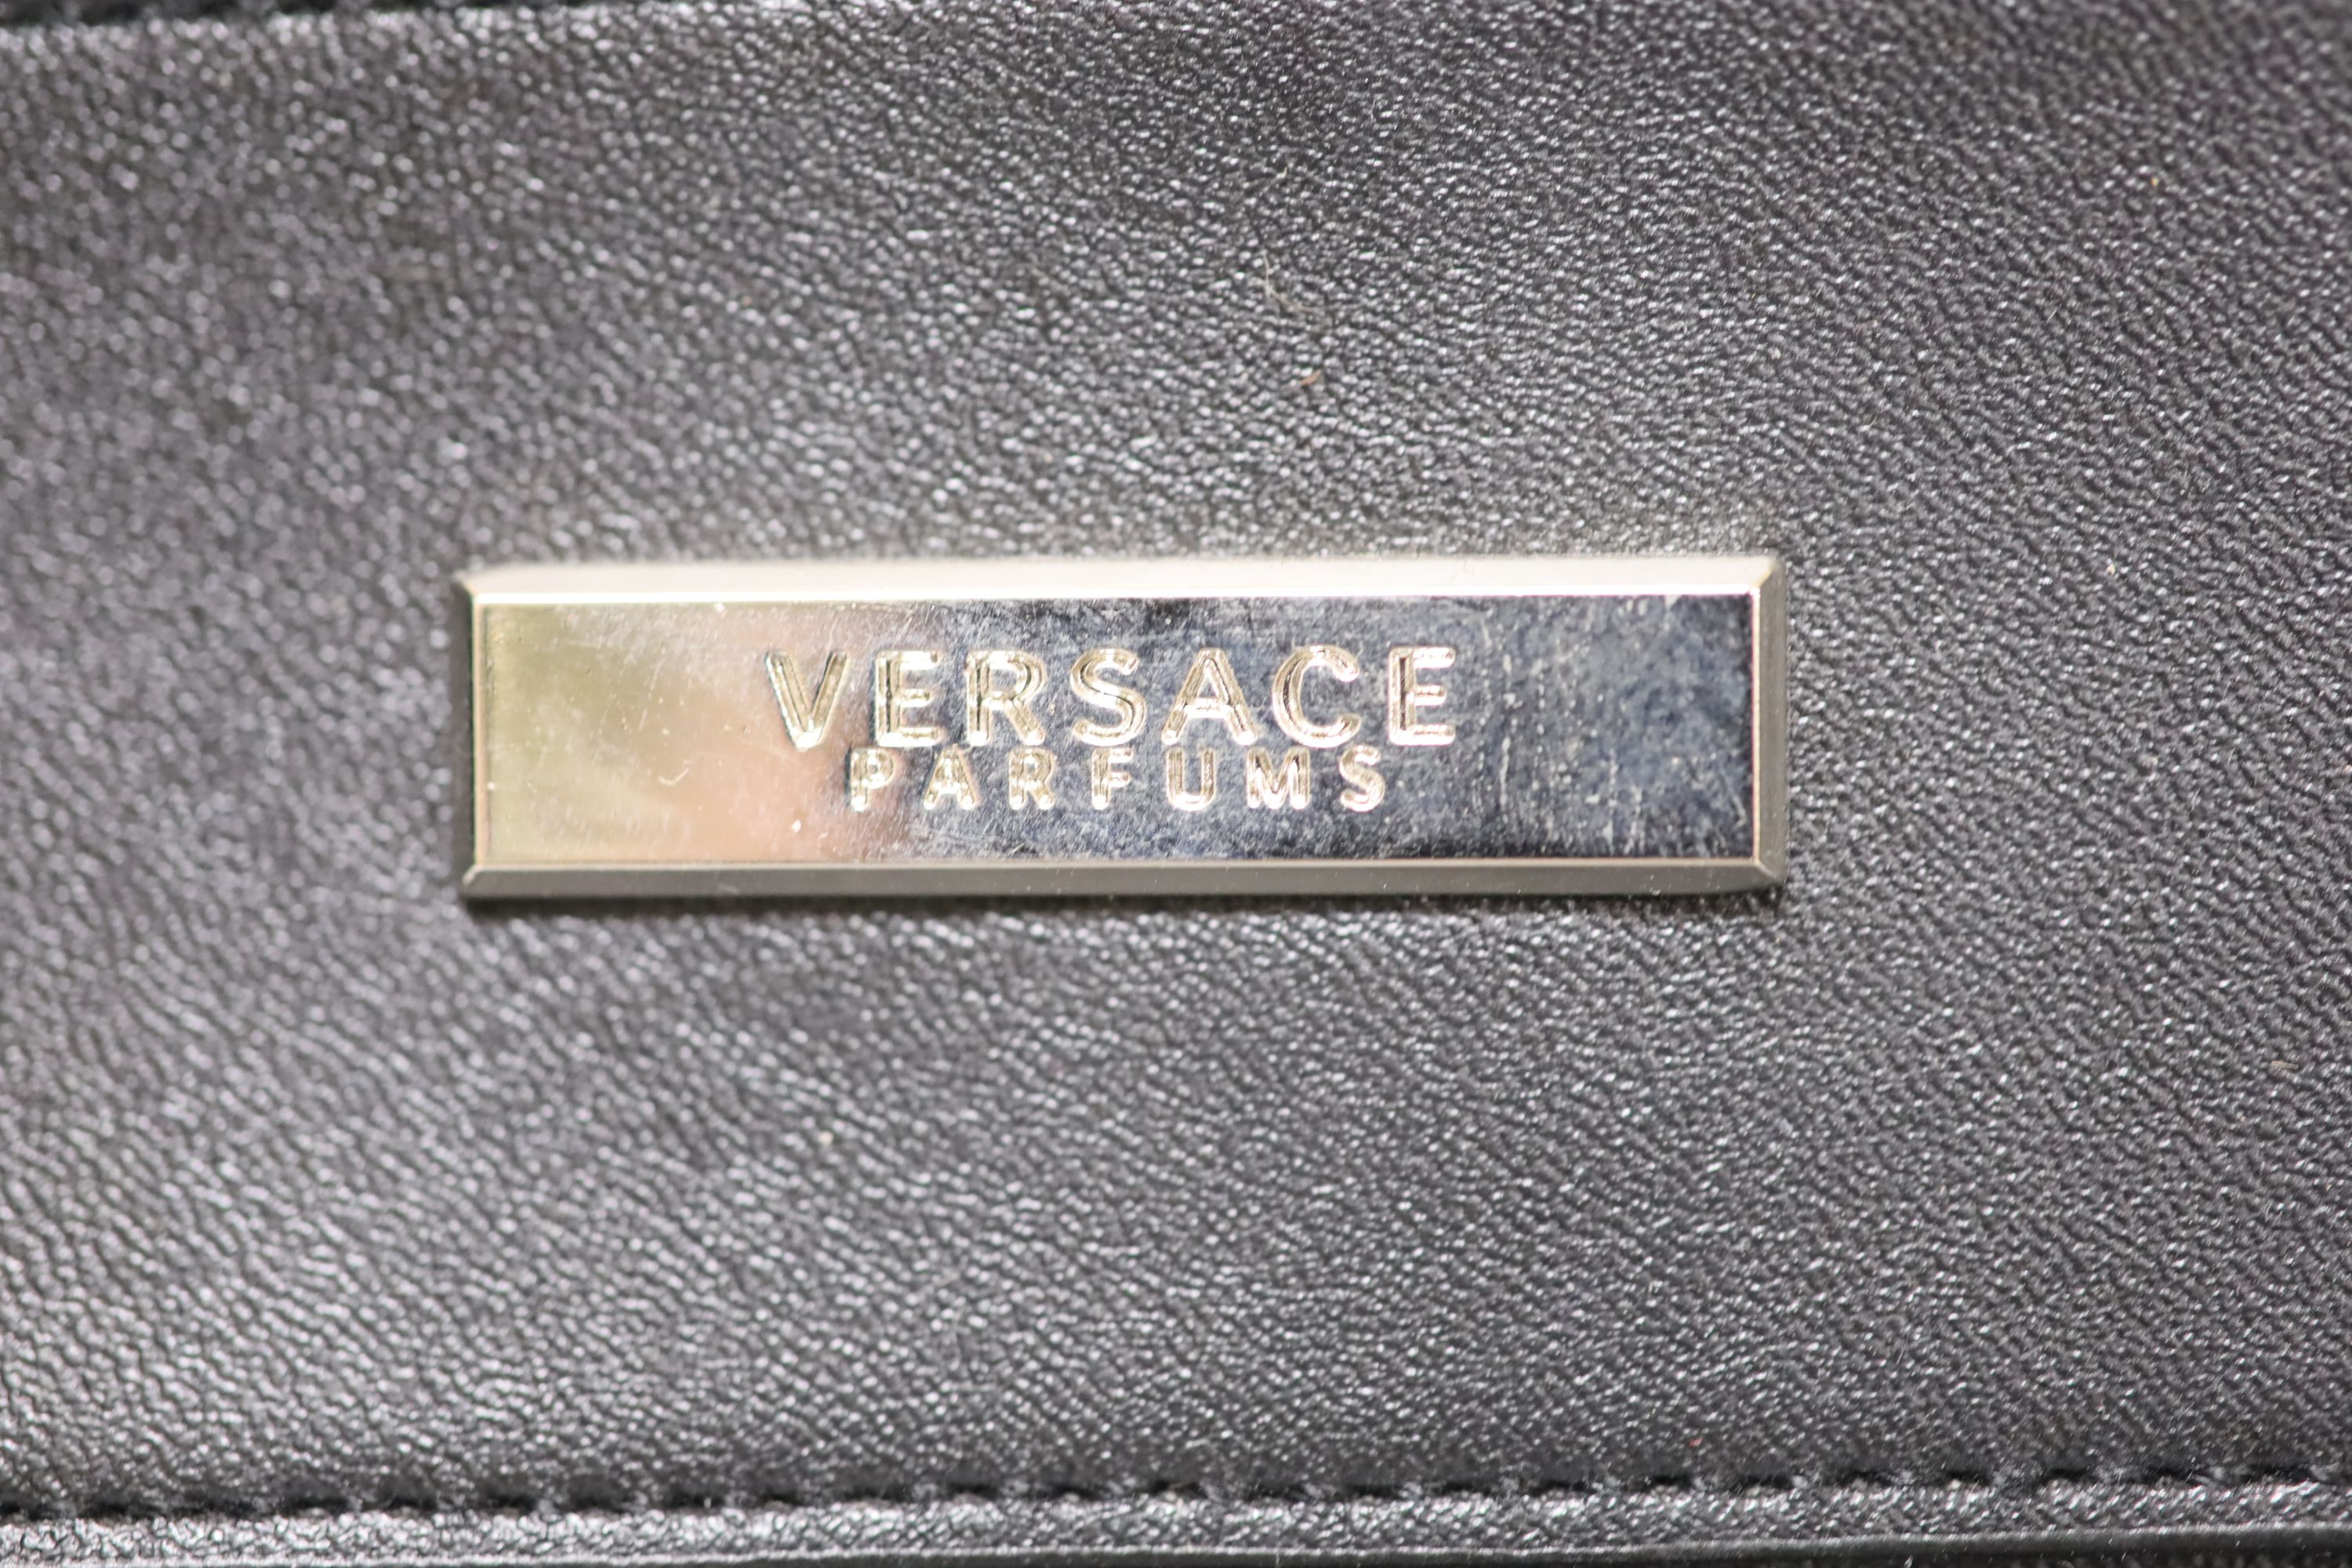 A Versace Parfums duffel bag